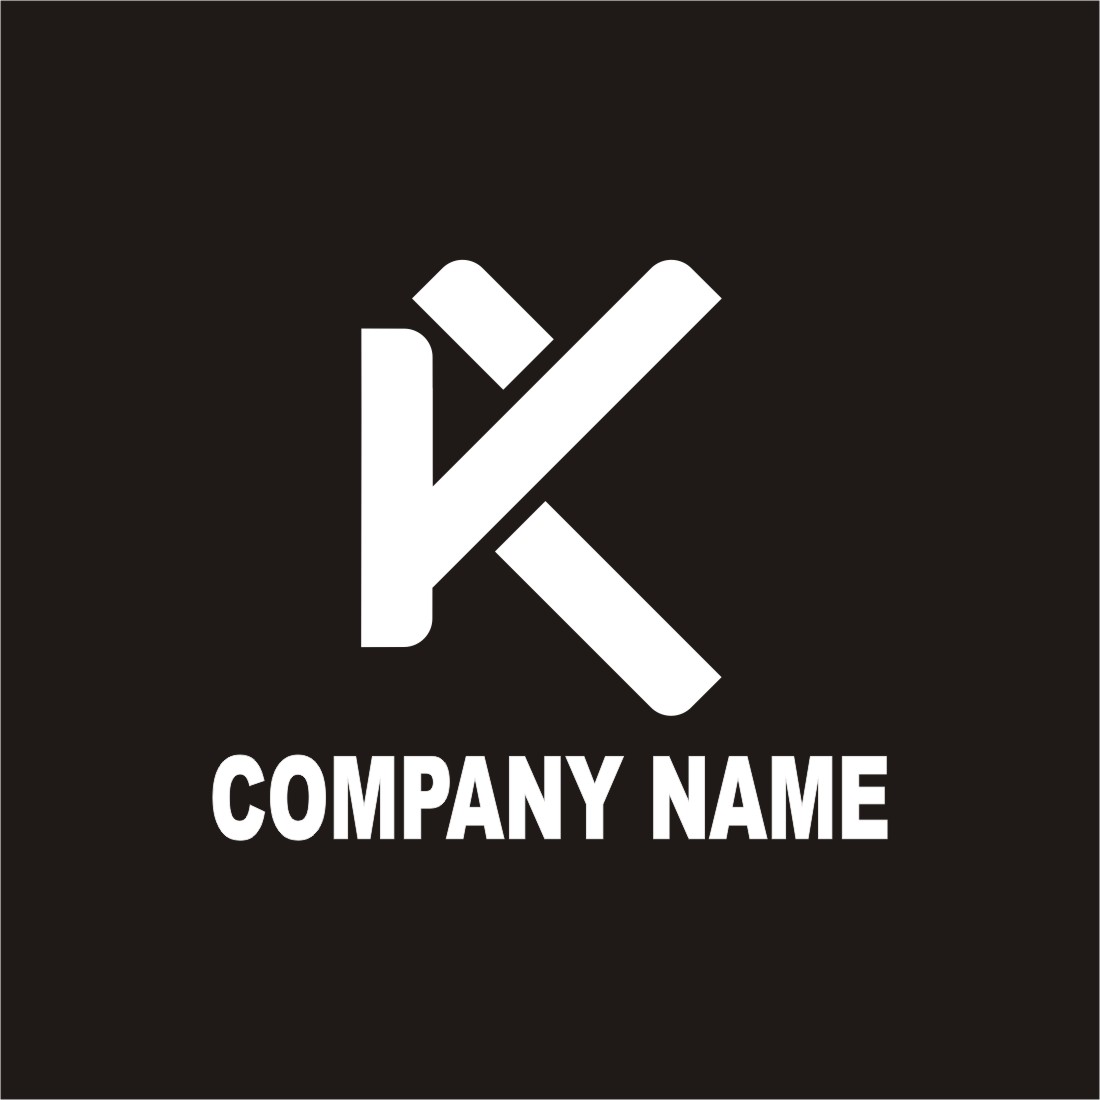 Professional K logo cover image.